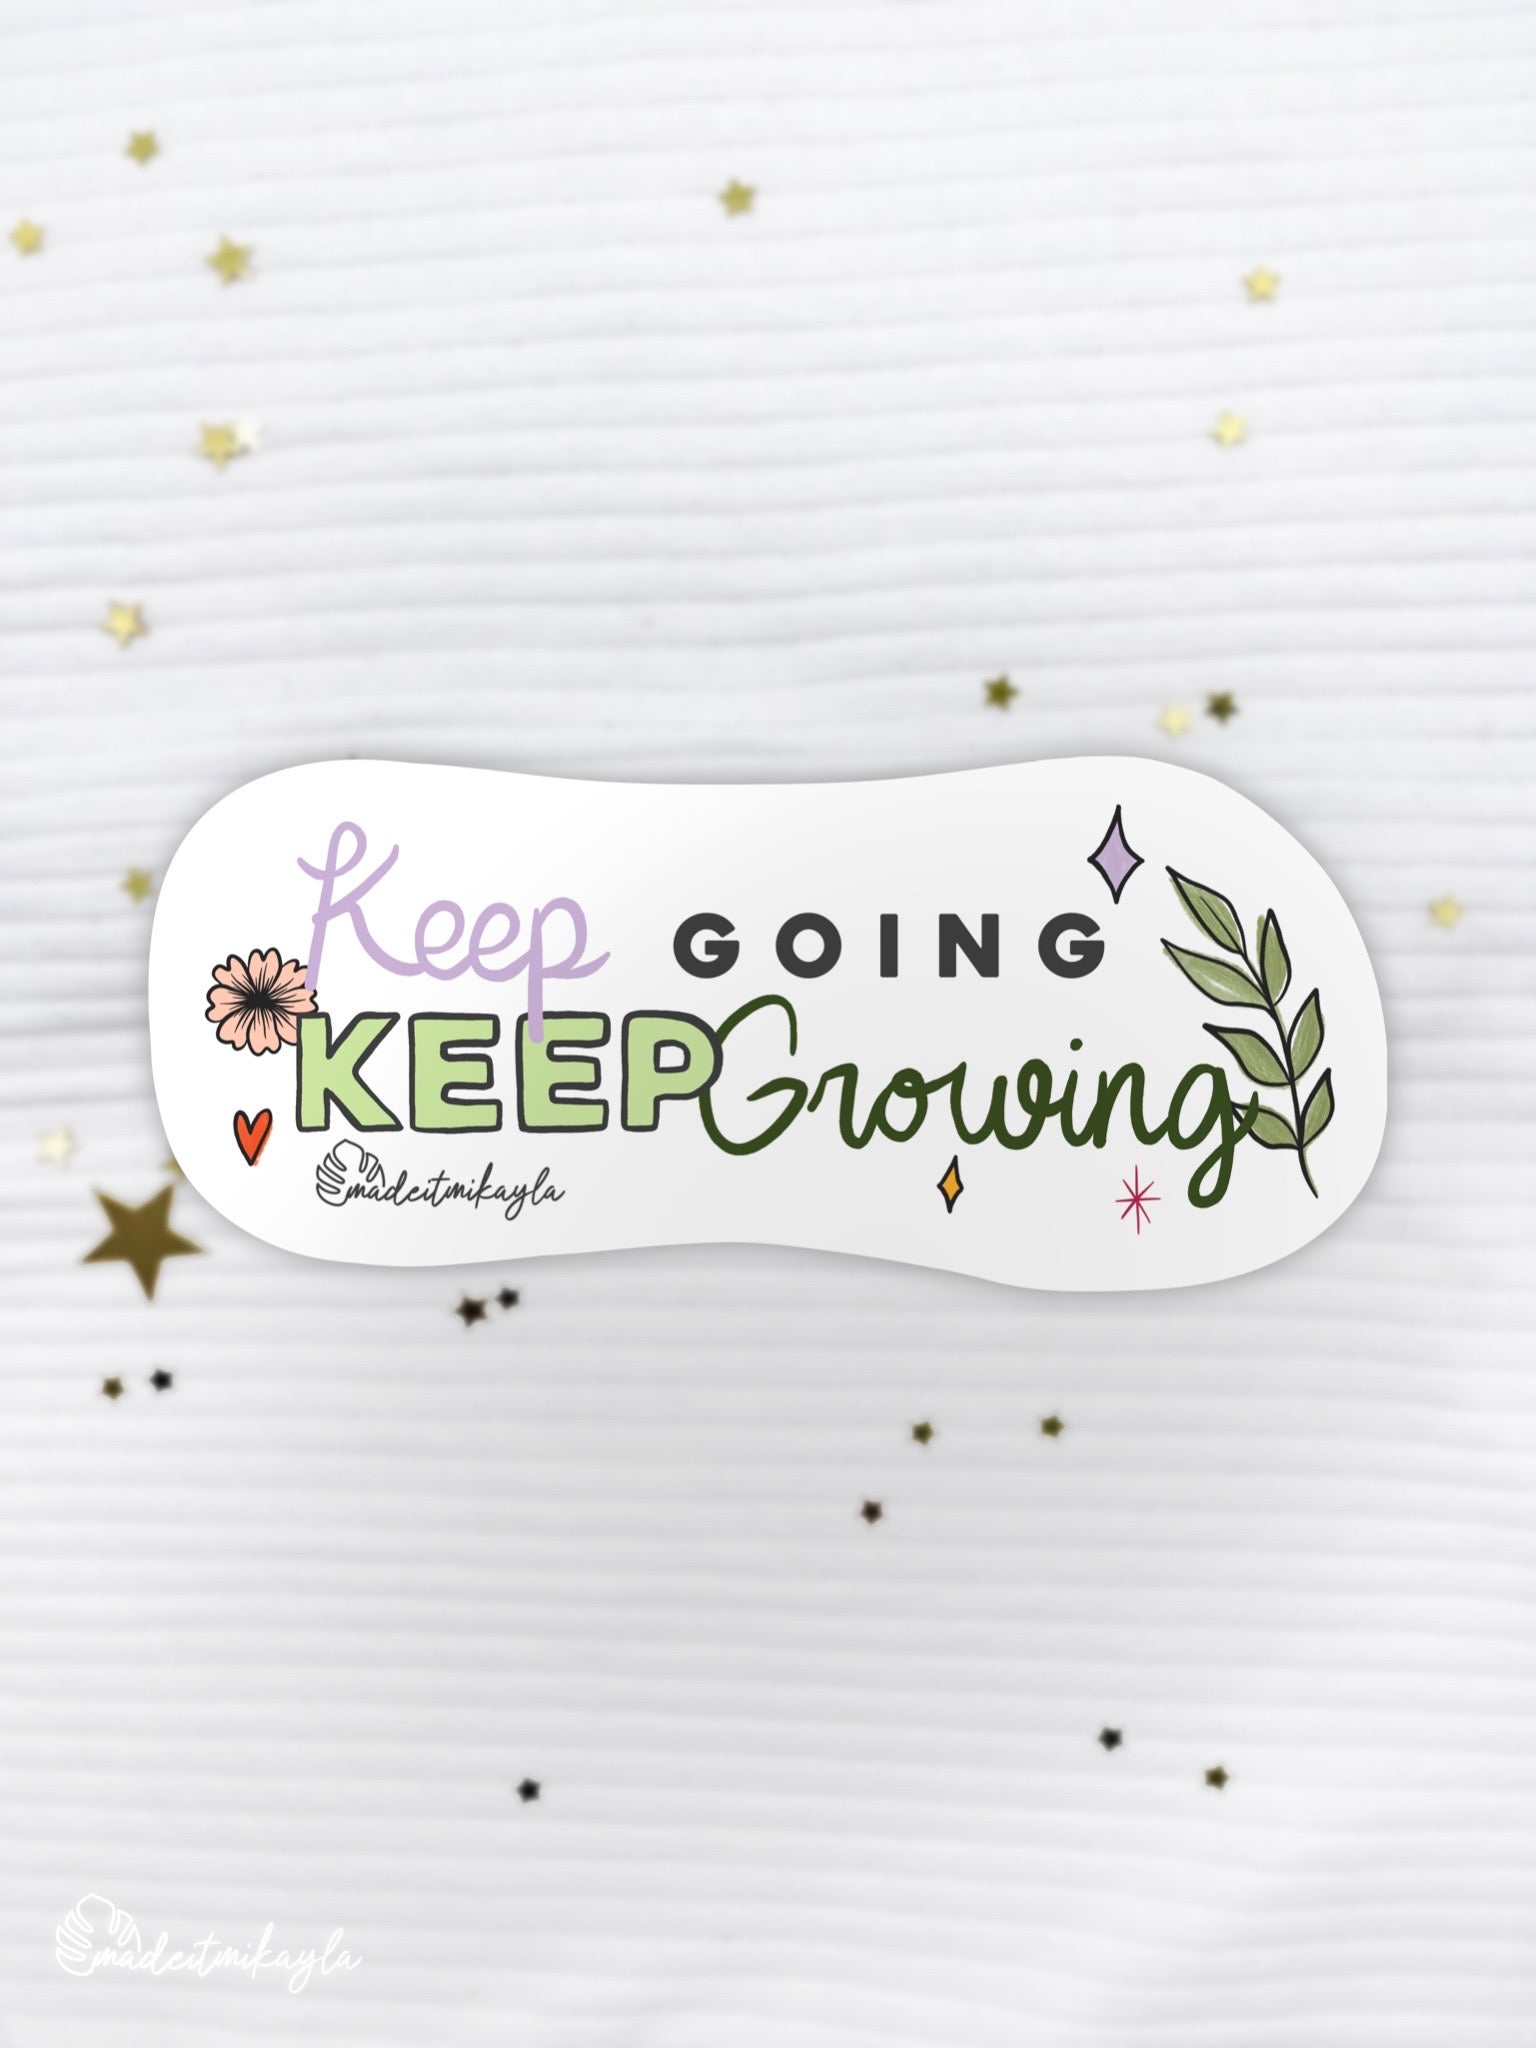 Keep Going Keep Growing Sticker | MadeItMikayla